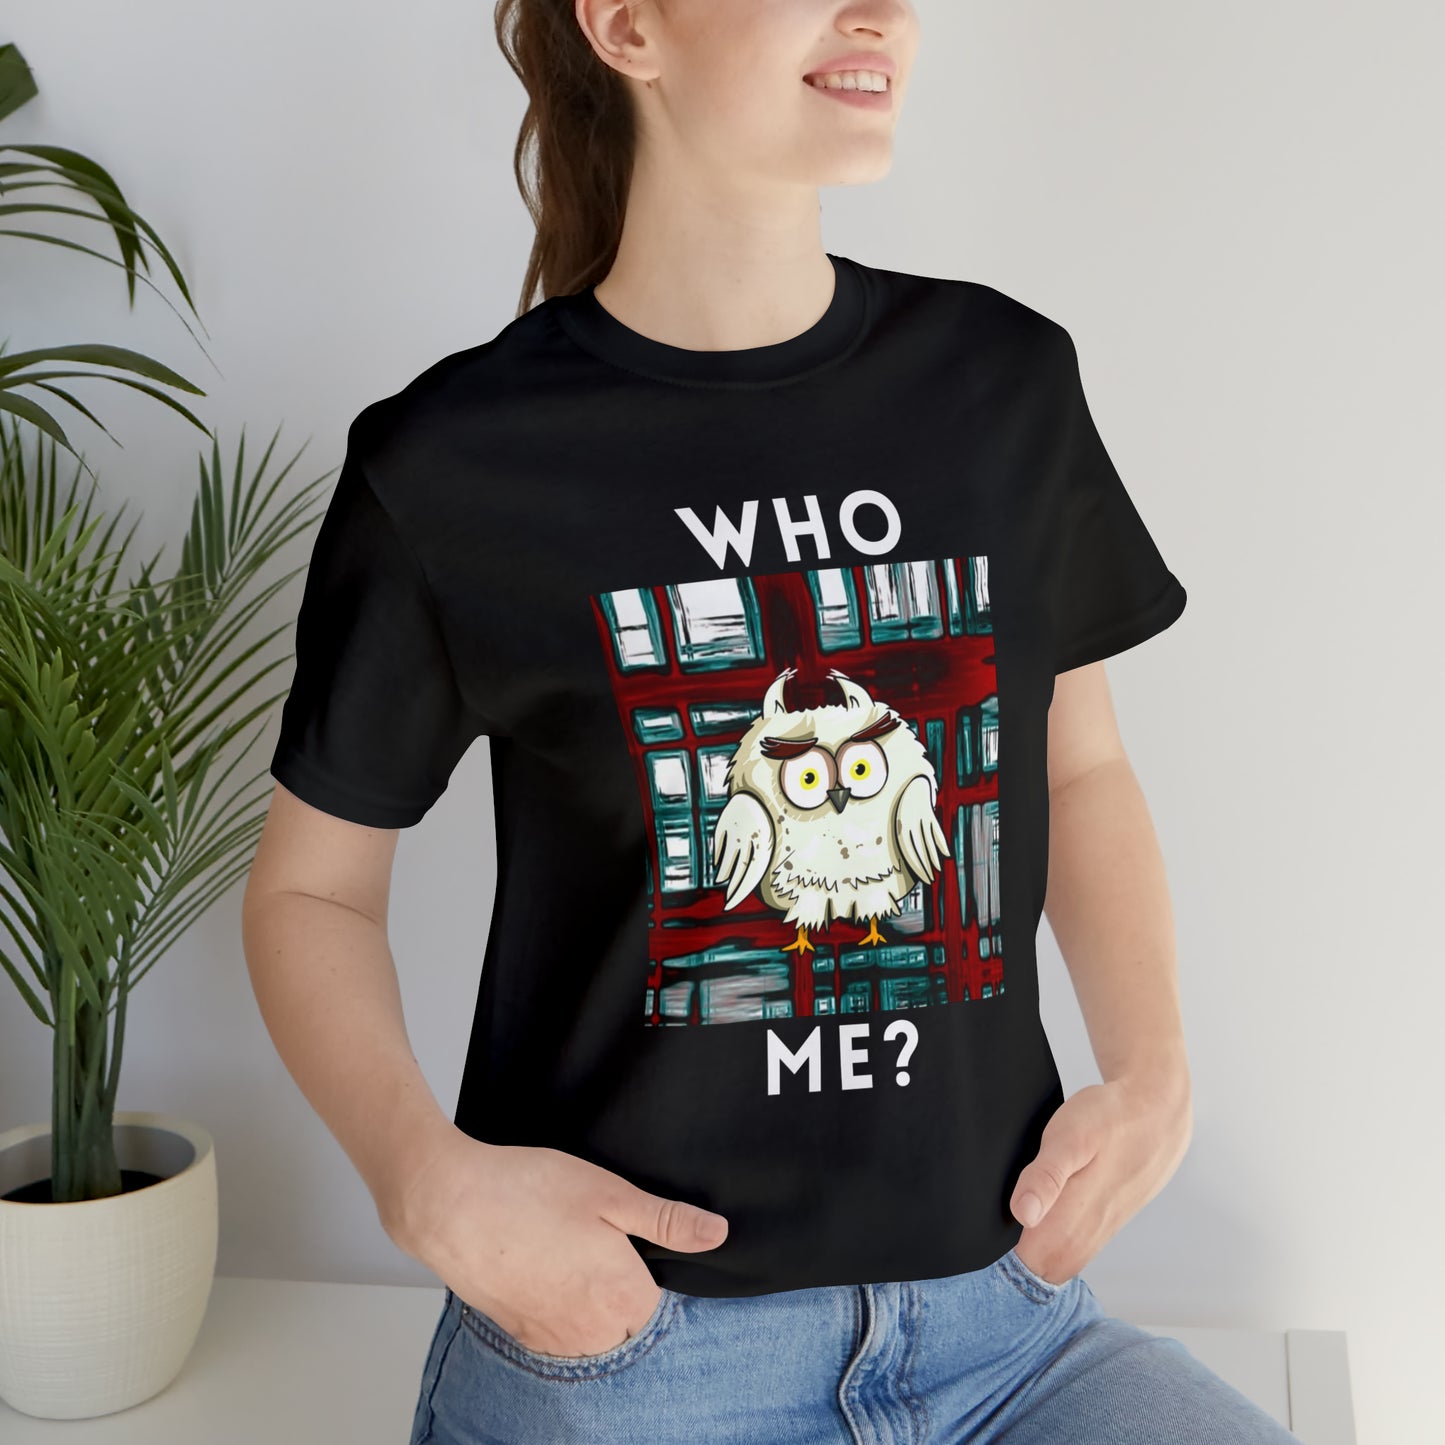 Bird, Who Me? Owl- Adult, Unisex Jersey Short Sleeve Tee, T-shirt